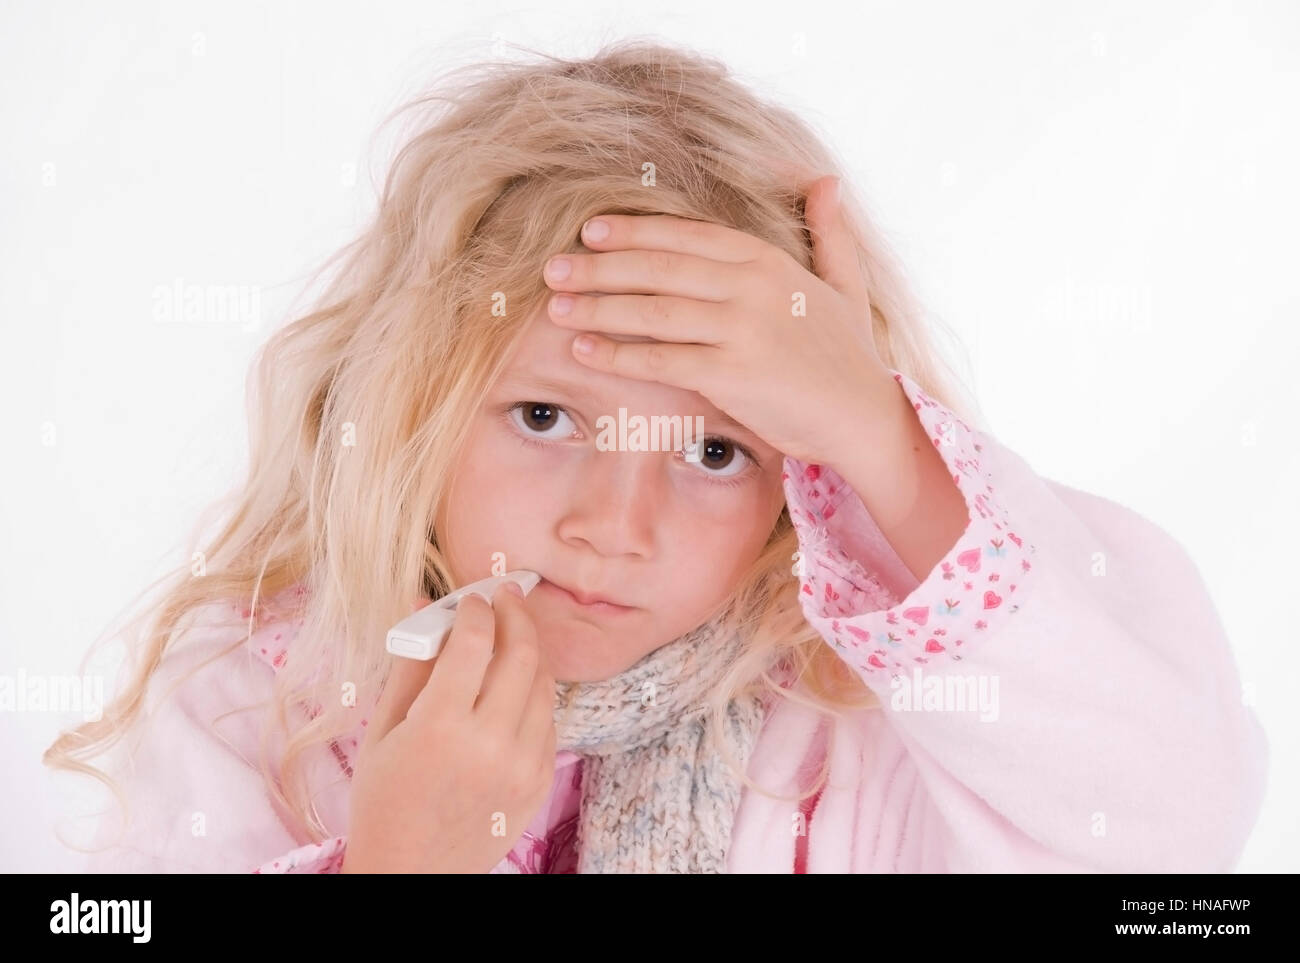 Maedchen, 6 Jahre, hat Fieber - girl with ague Stock Photo